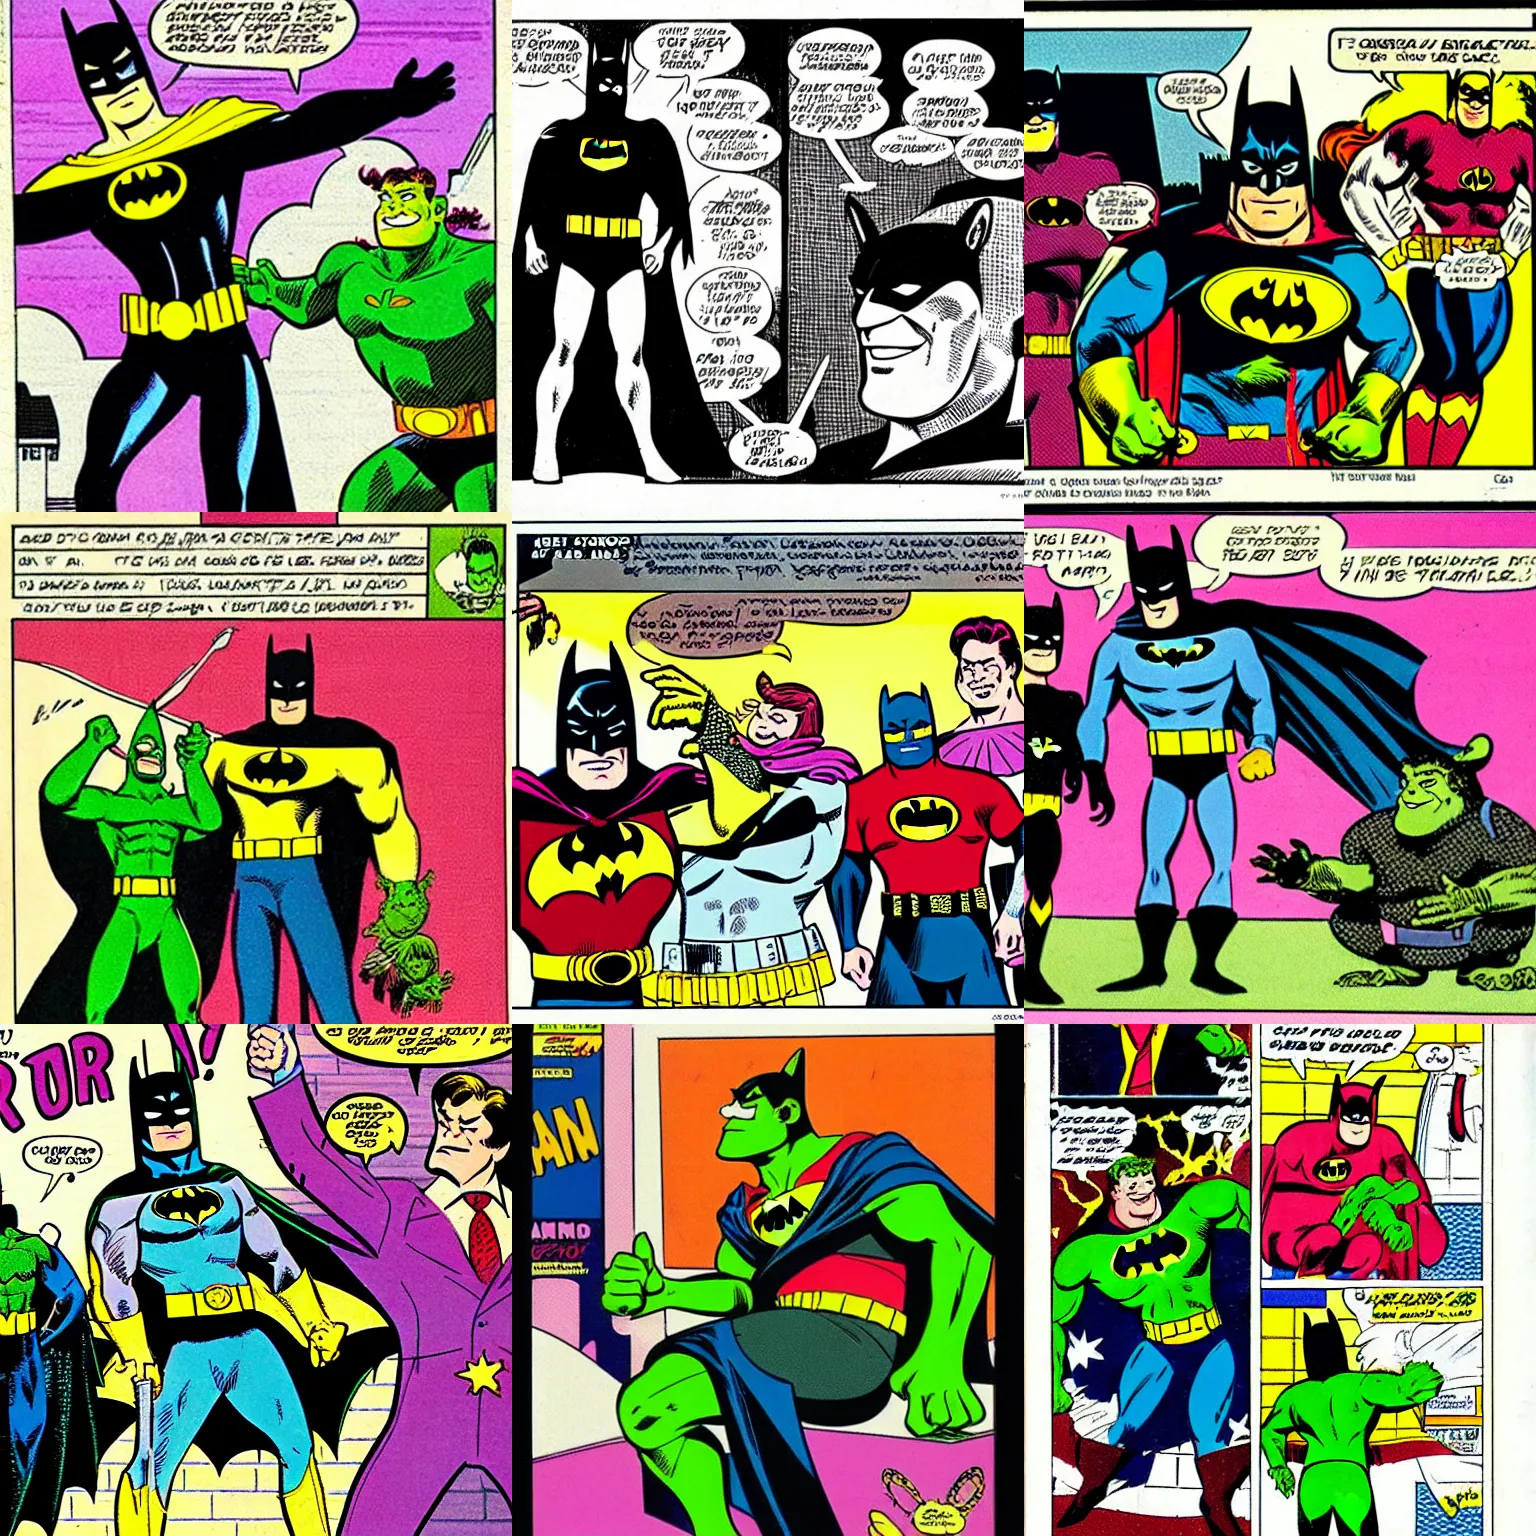 Prompt: a 1970s comic book panel featuring Batman (starring Shrek)